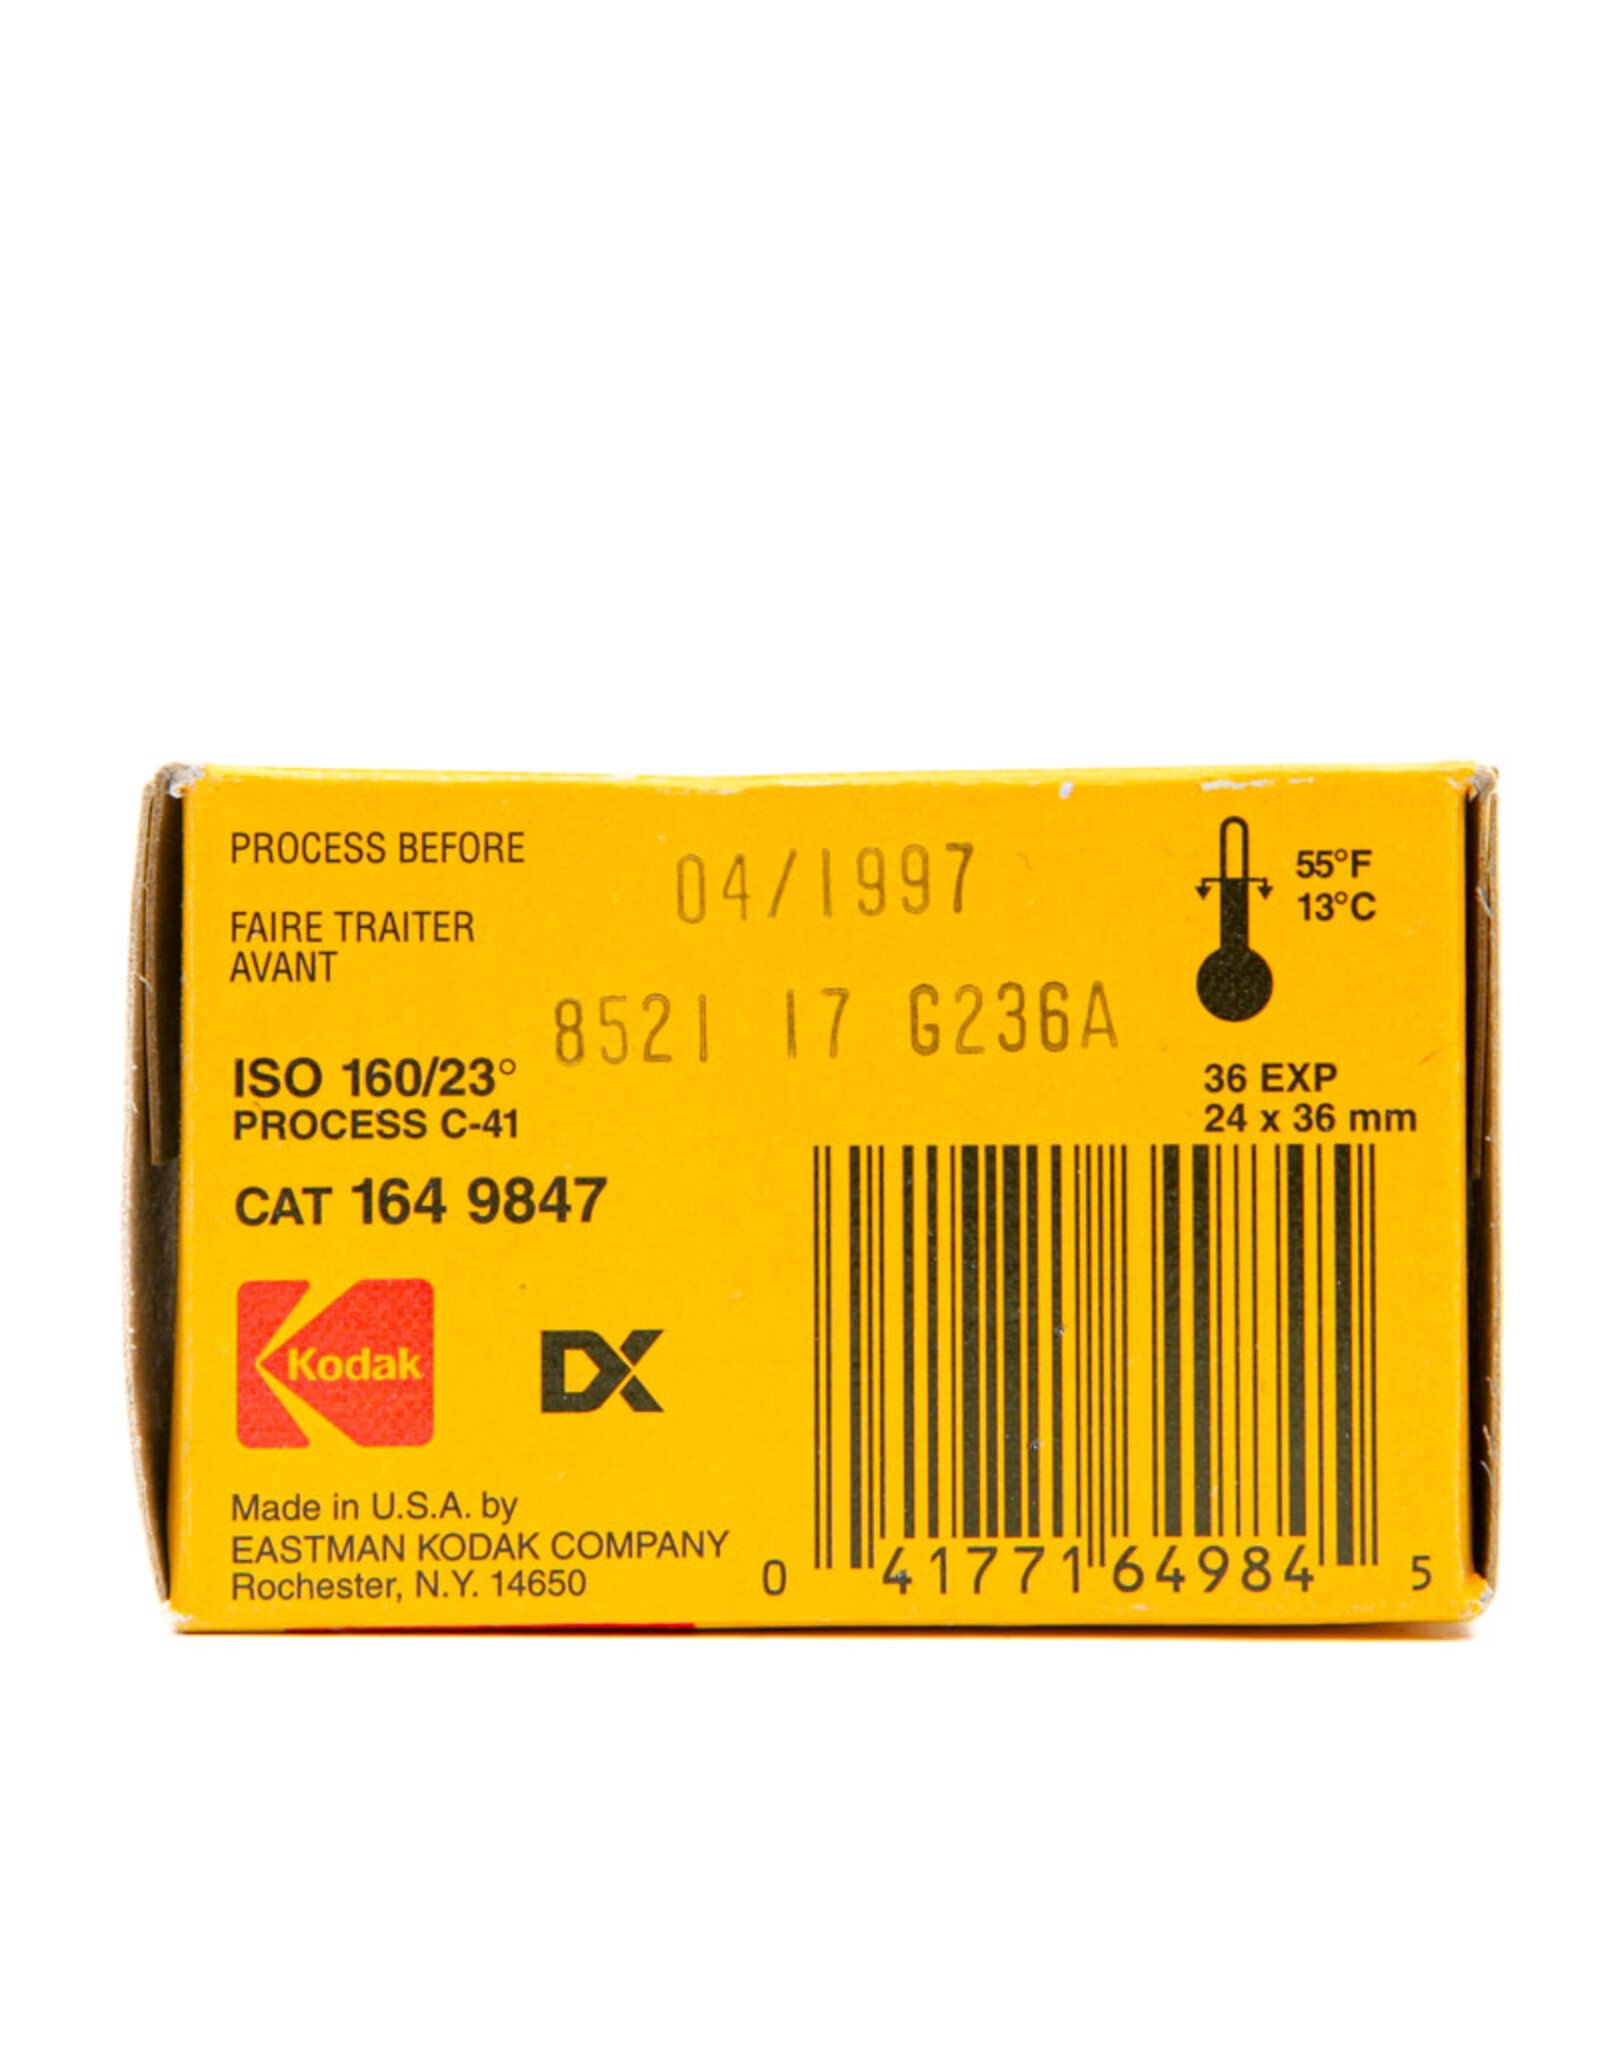 Kodak Kodak Vericolor III VPS 35mm color negative film expired 04/97, kept frozen